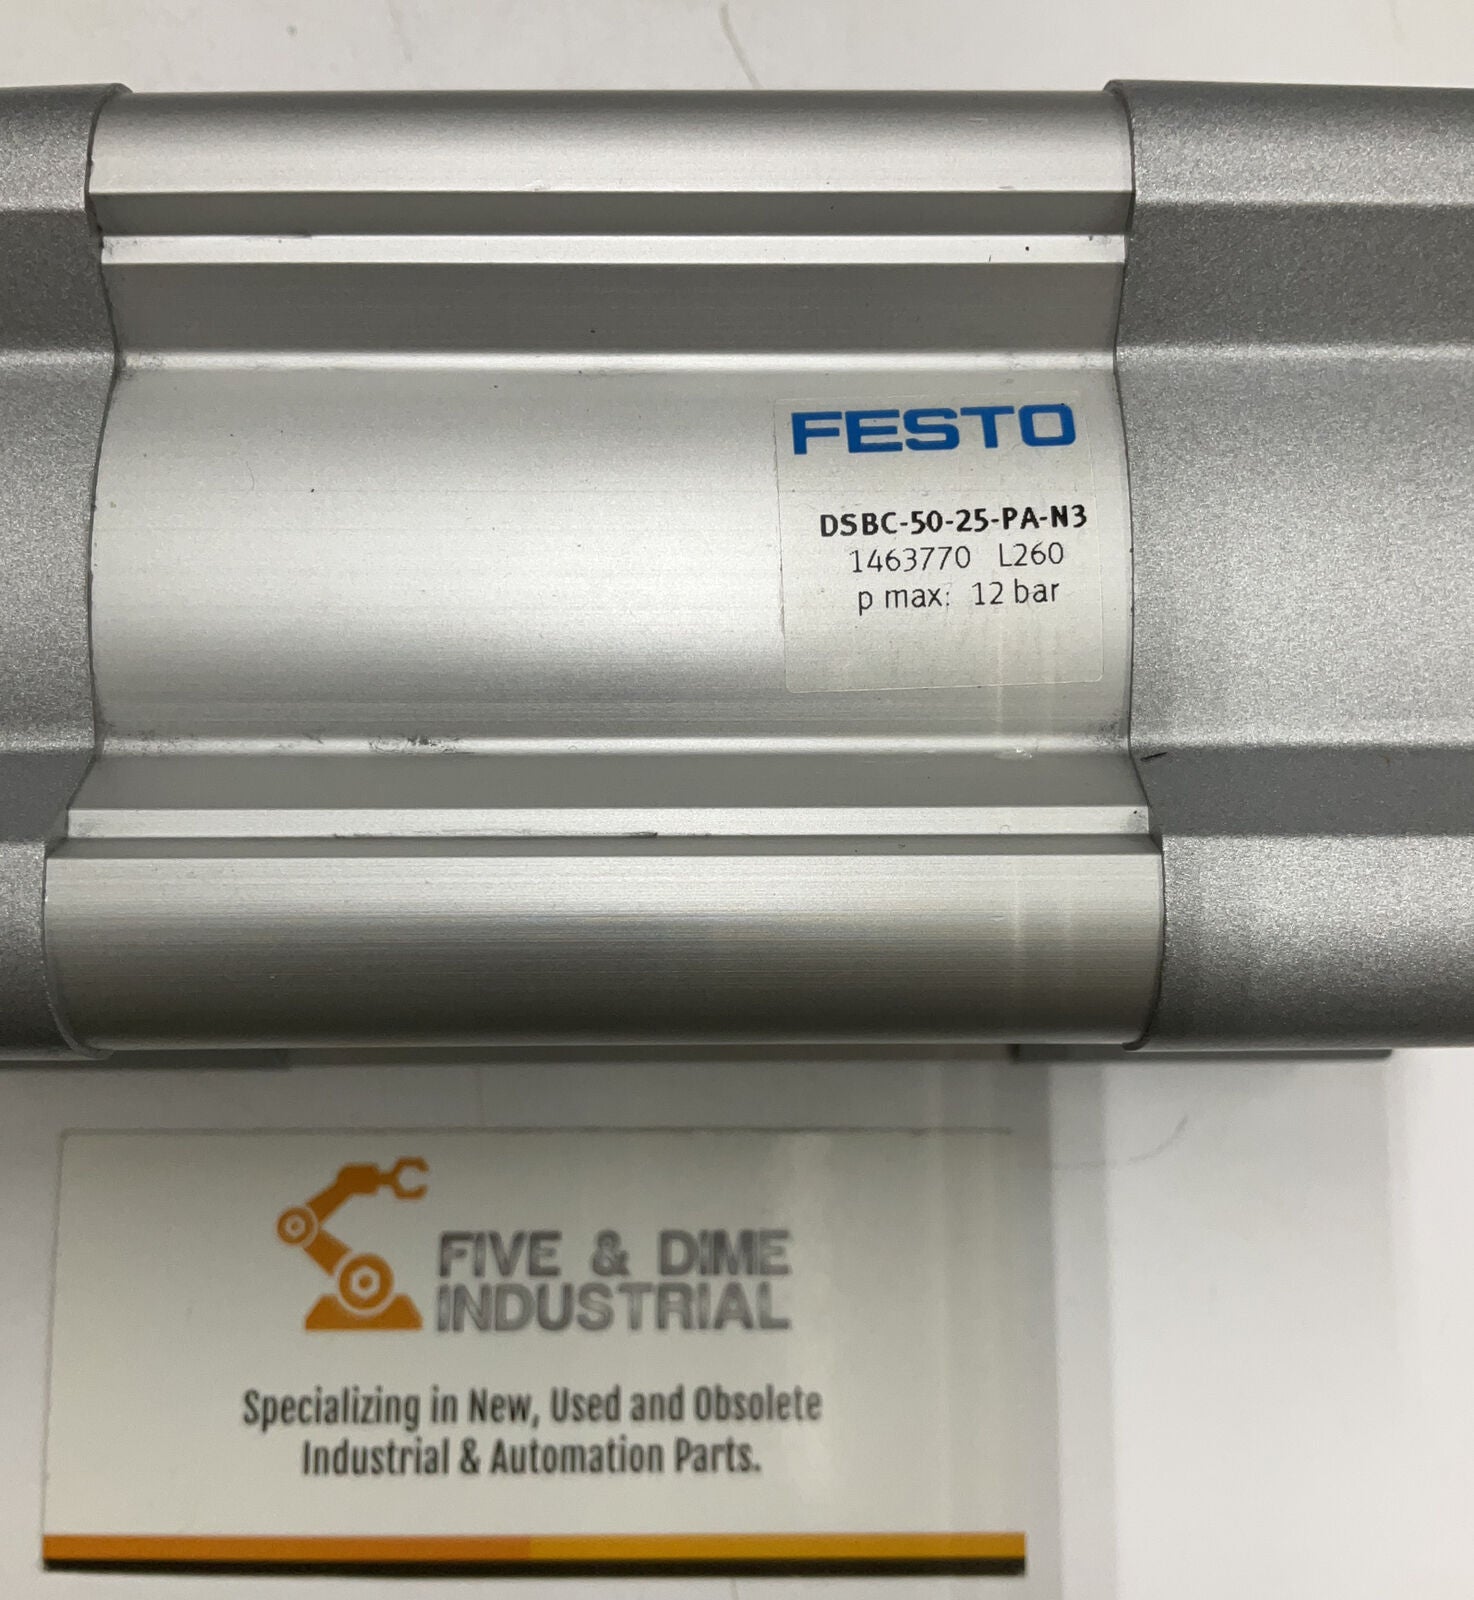 Festo DSBC-50-25-PA-N3 New Pneumatic Cylinder 1463770 Ser. L260 (CL340) - 0